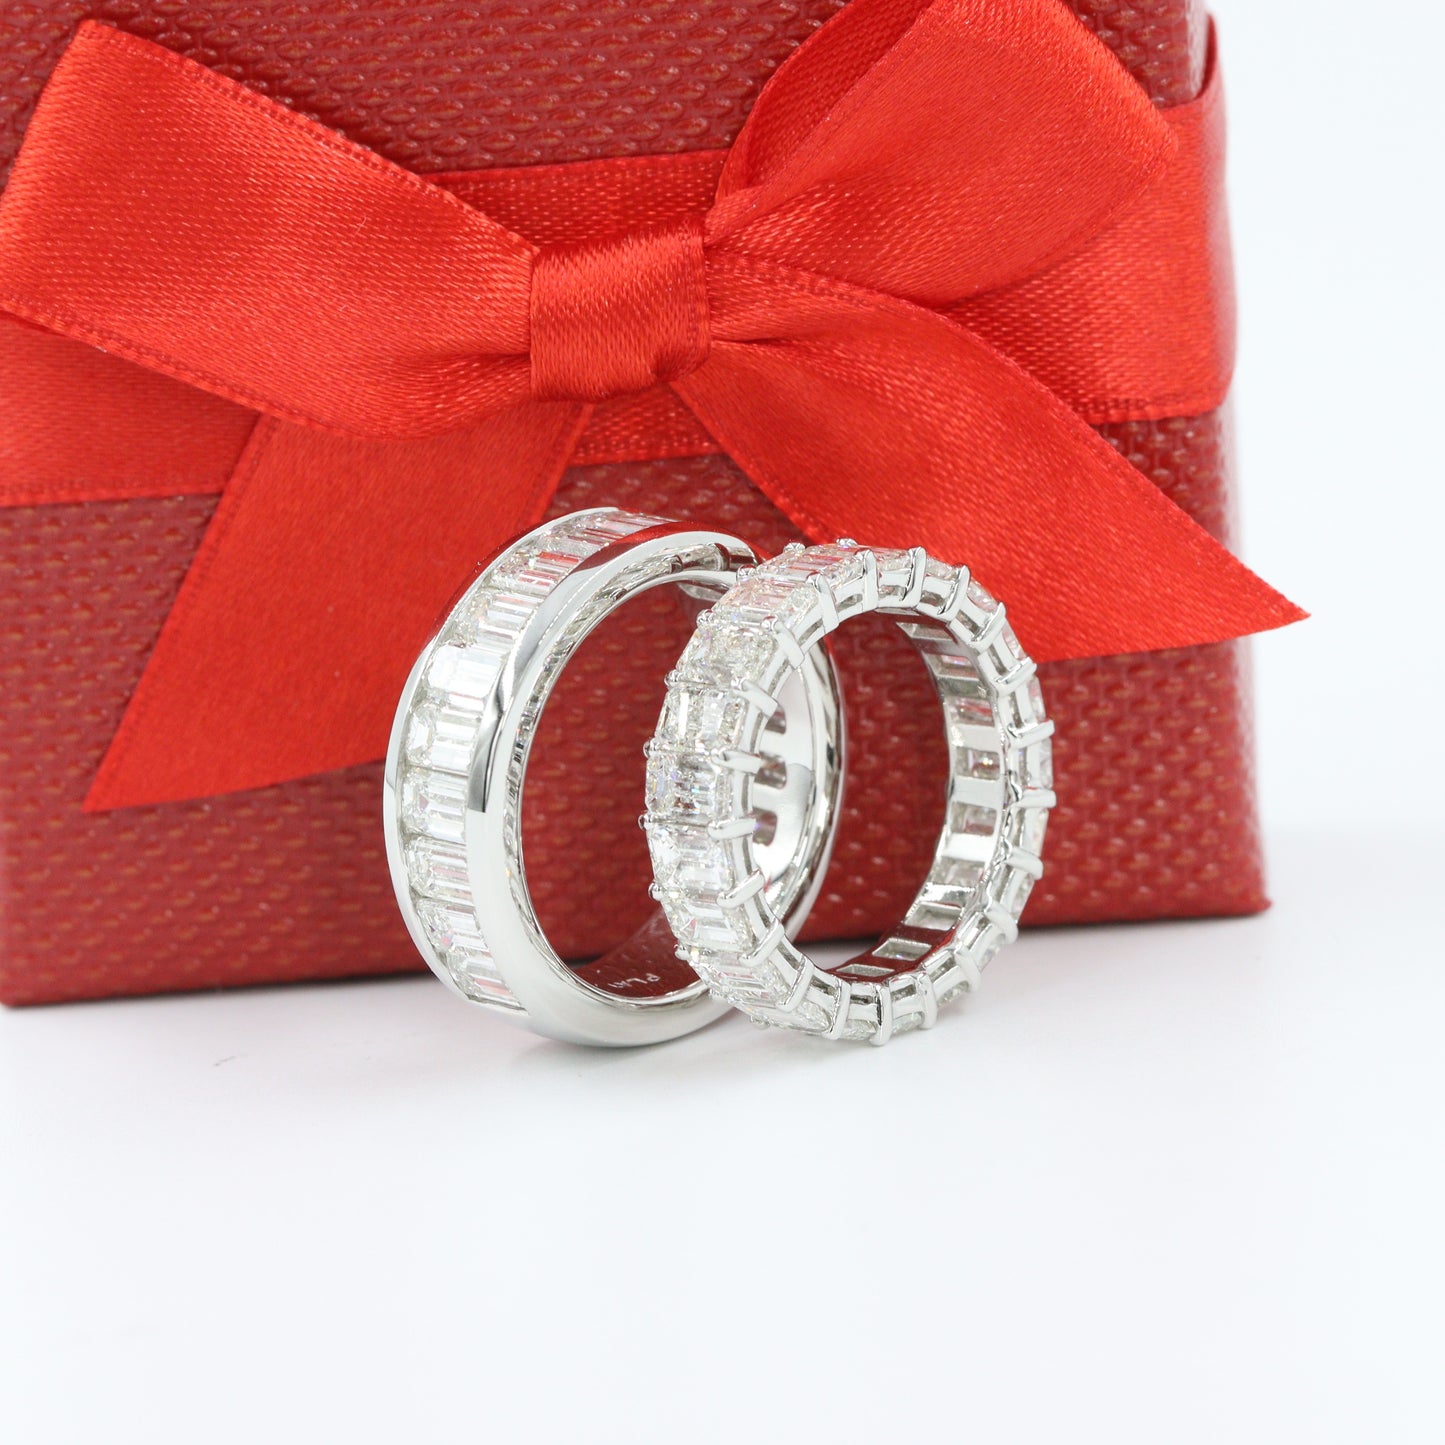 7ct Emerald Cut Diamond Wedding Band/ Channel Set Emerald Cut Diamond Eternity Wedding Ring/ Men and Women's Wedding Ring/ Anniversary gift